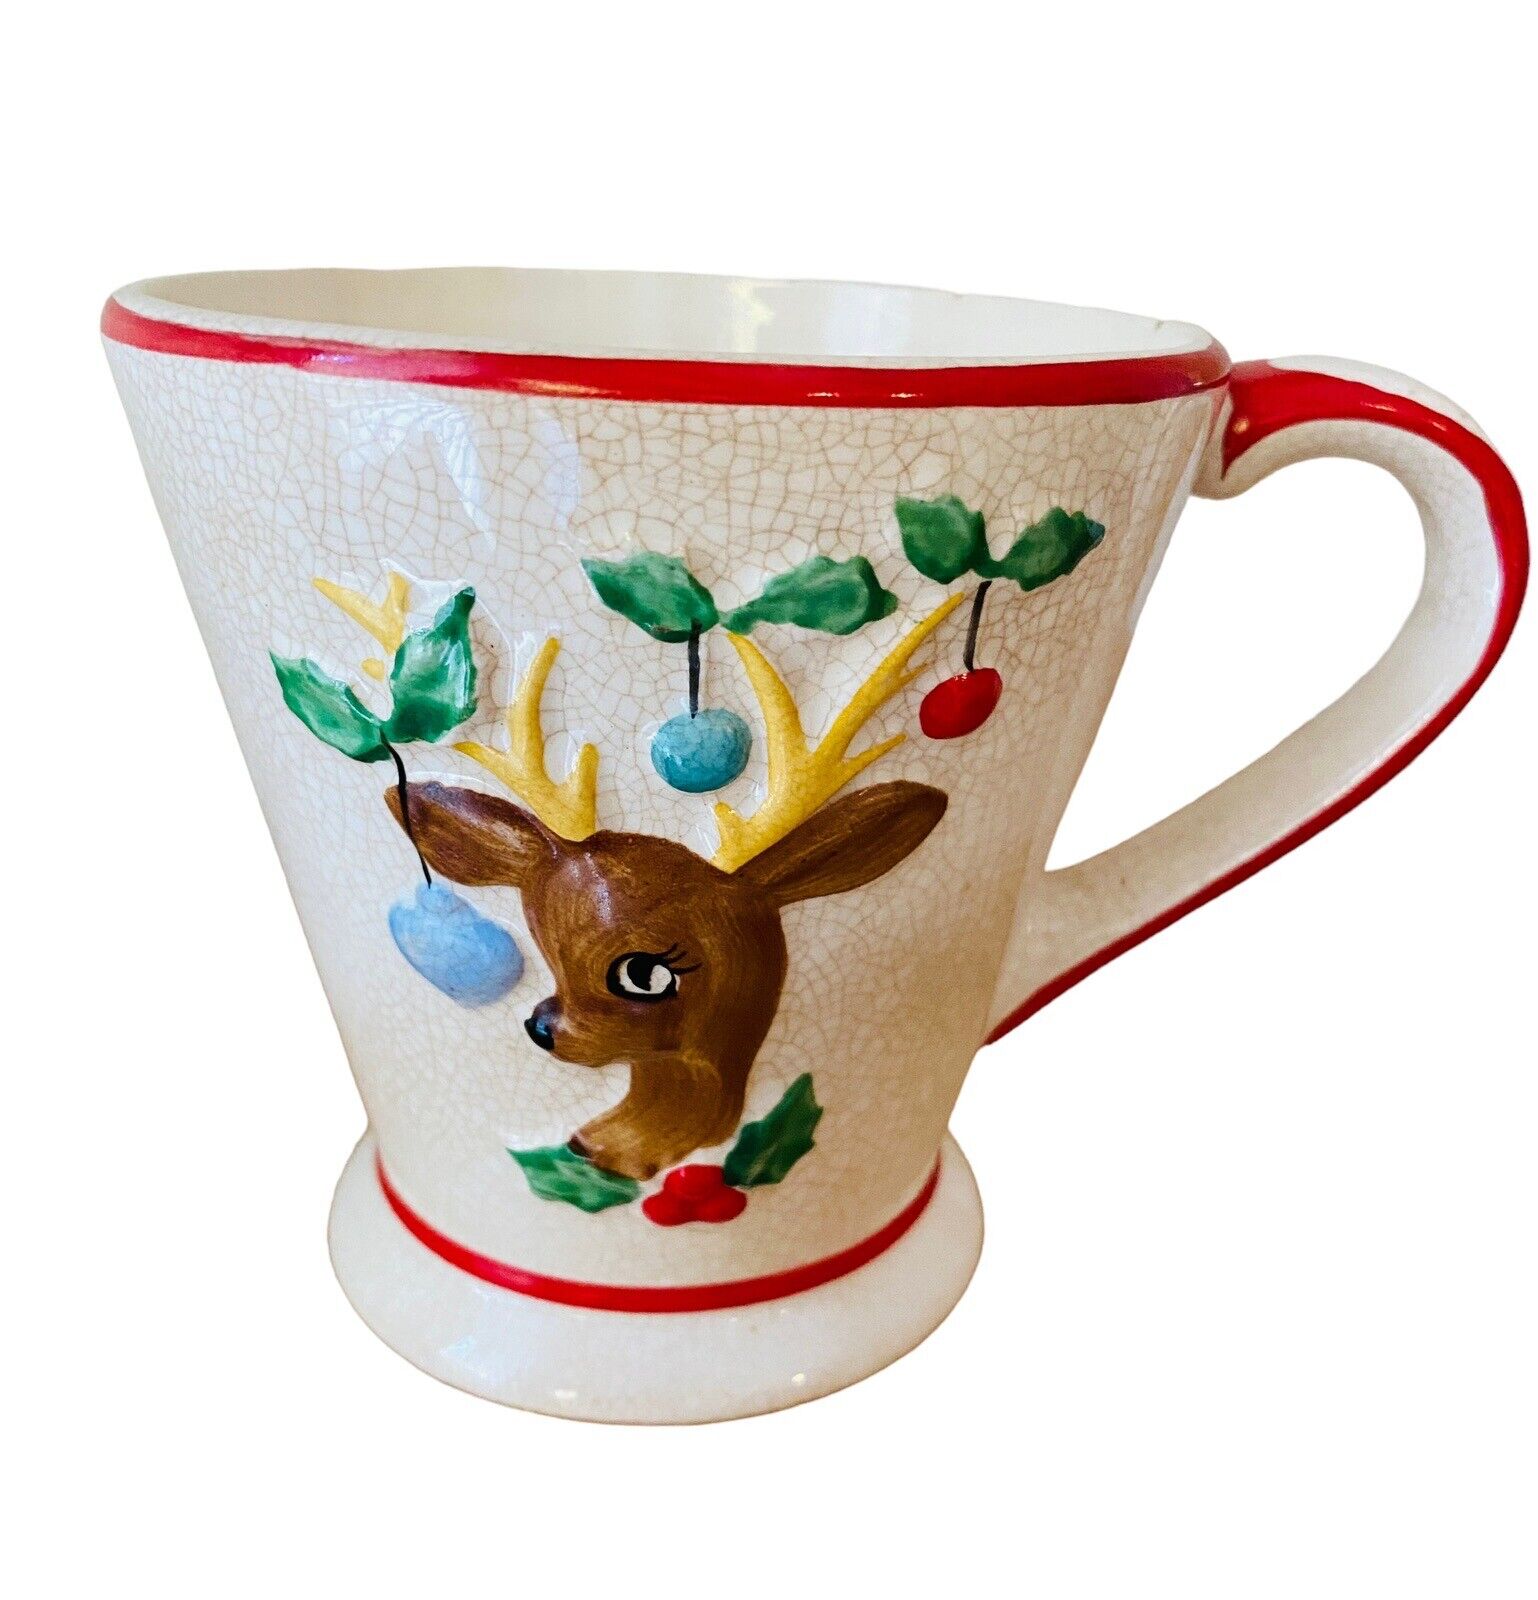 Vintage Reindeer Mug Ornaments And Holly Handled Mug 3.75 Inch High